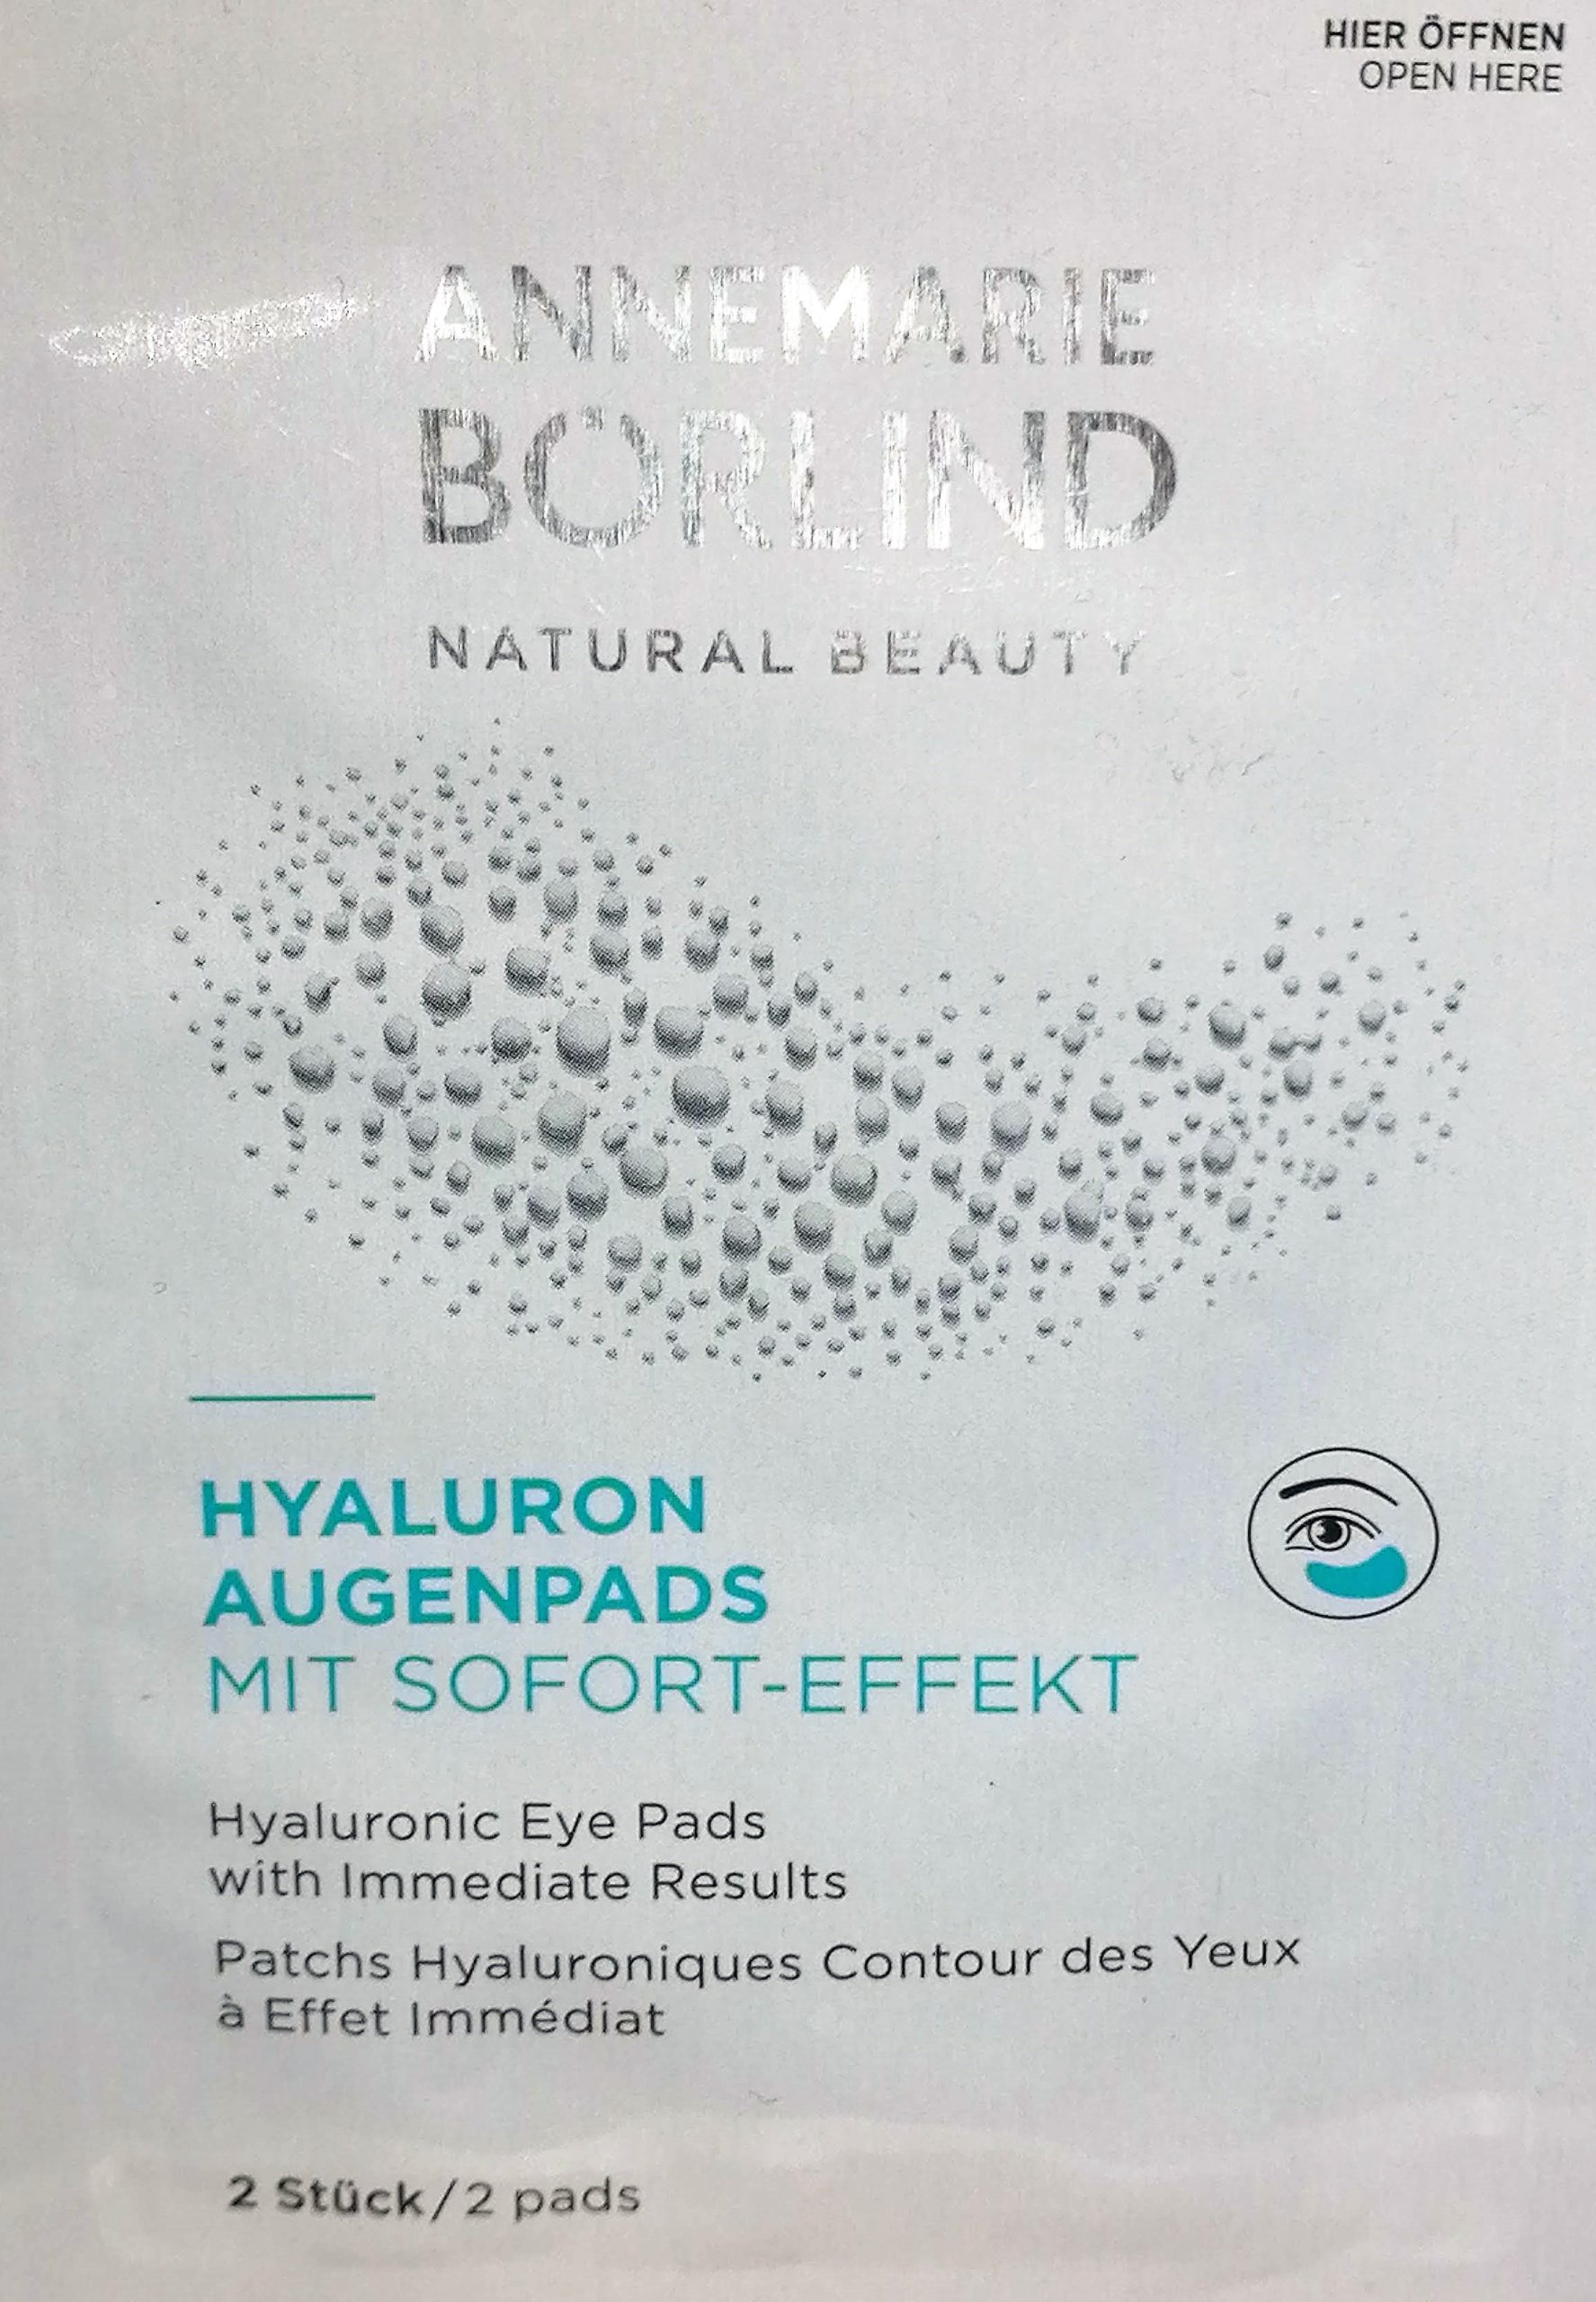 Hyaluronic Eye Pads